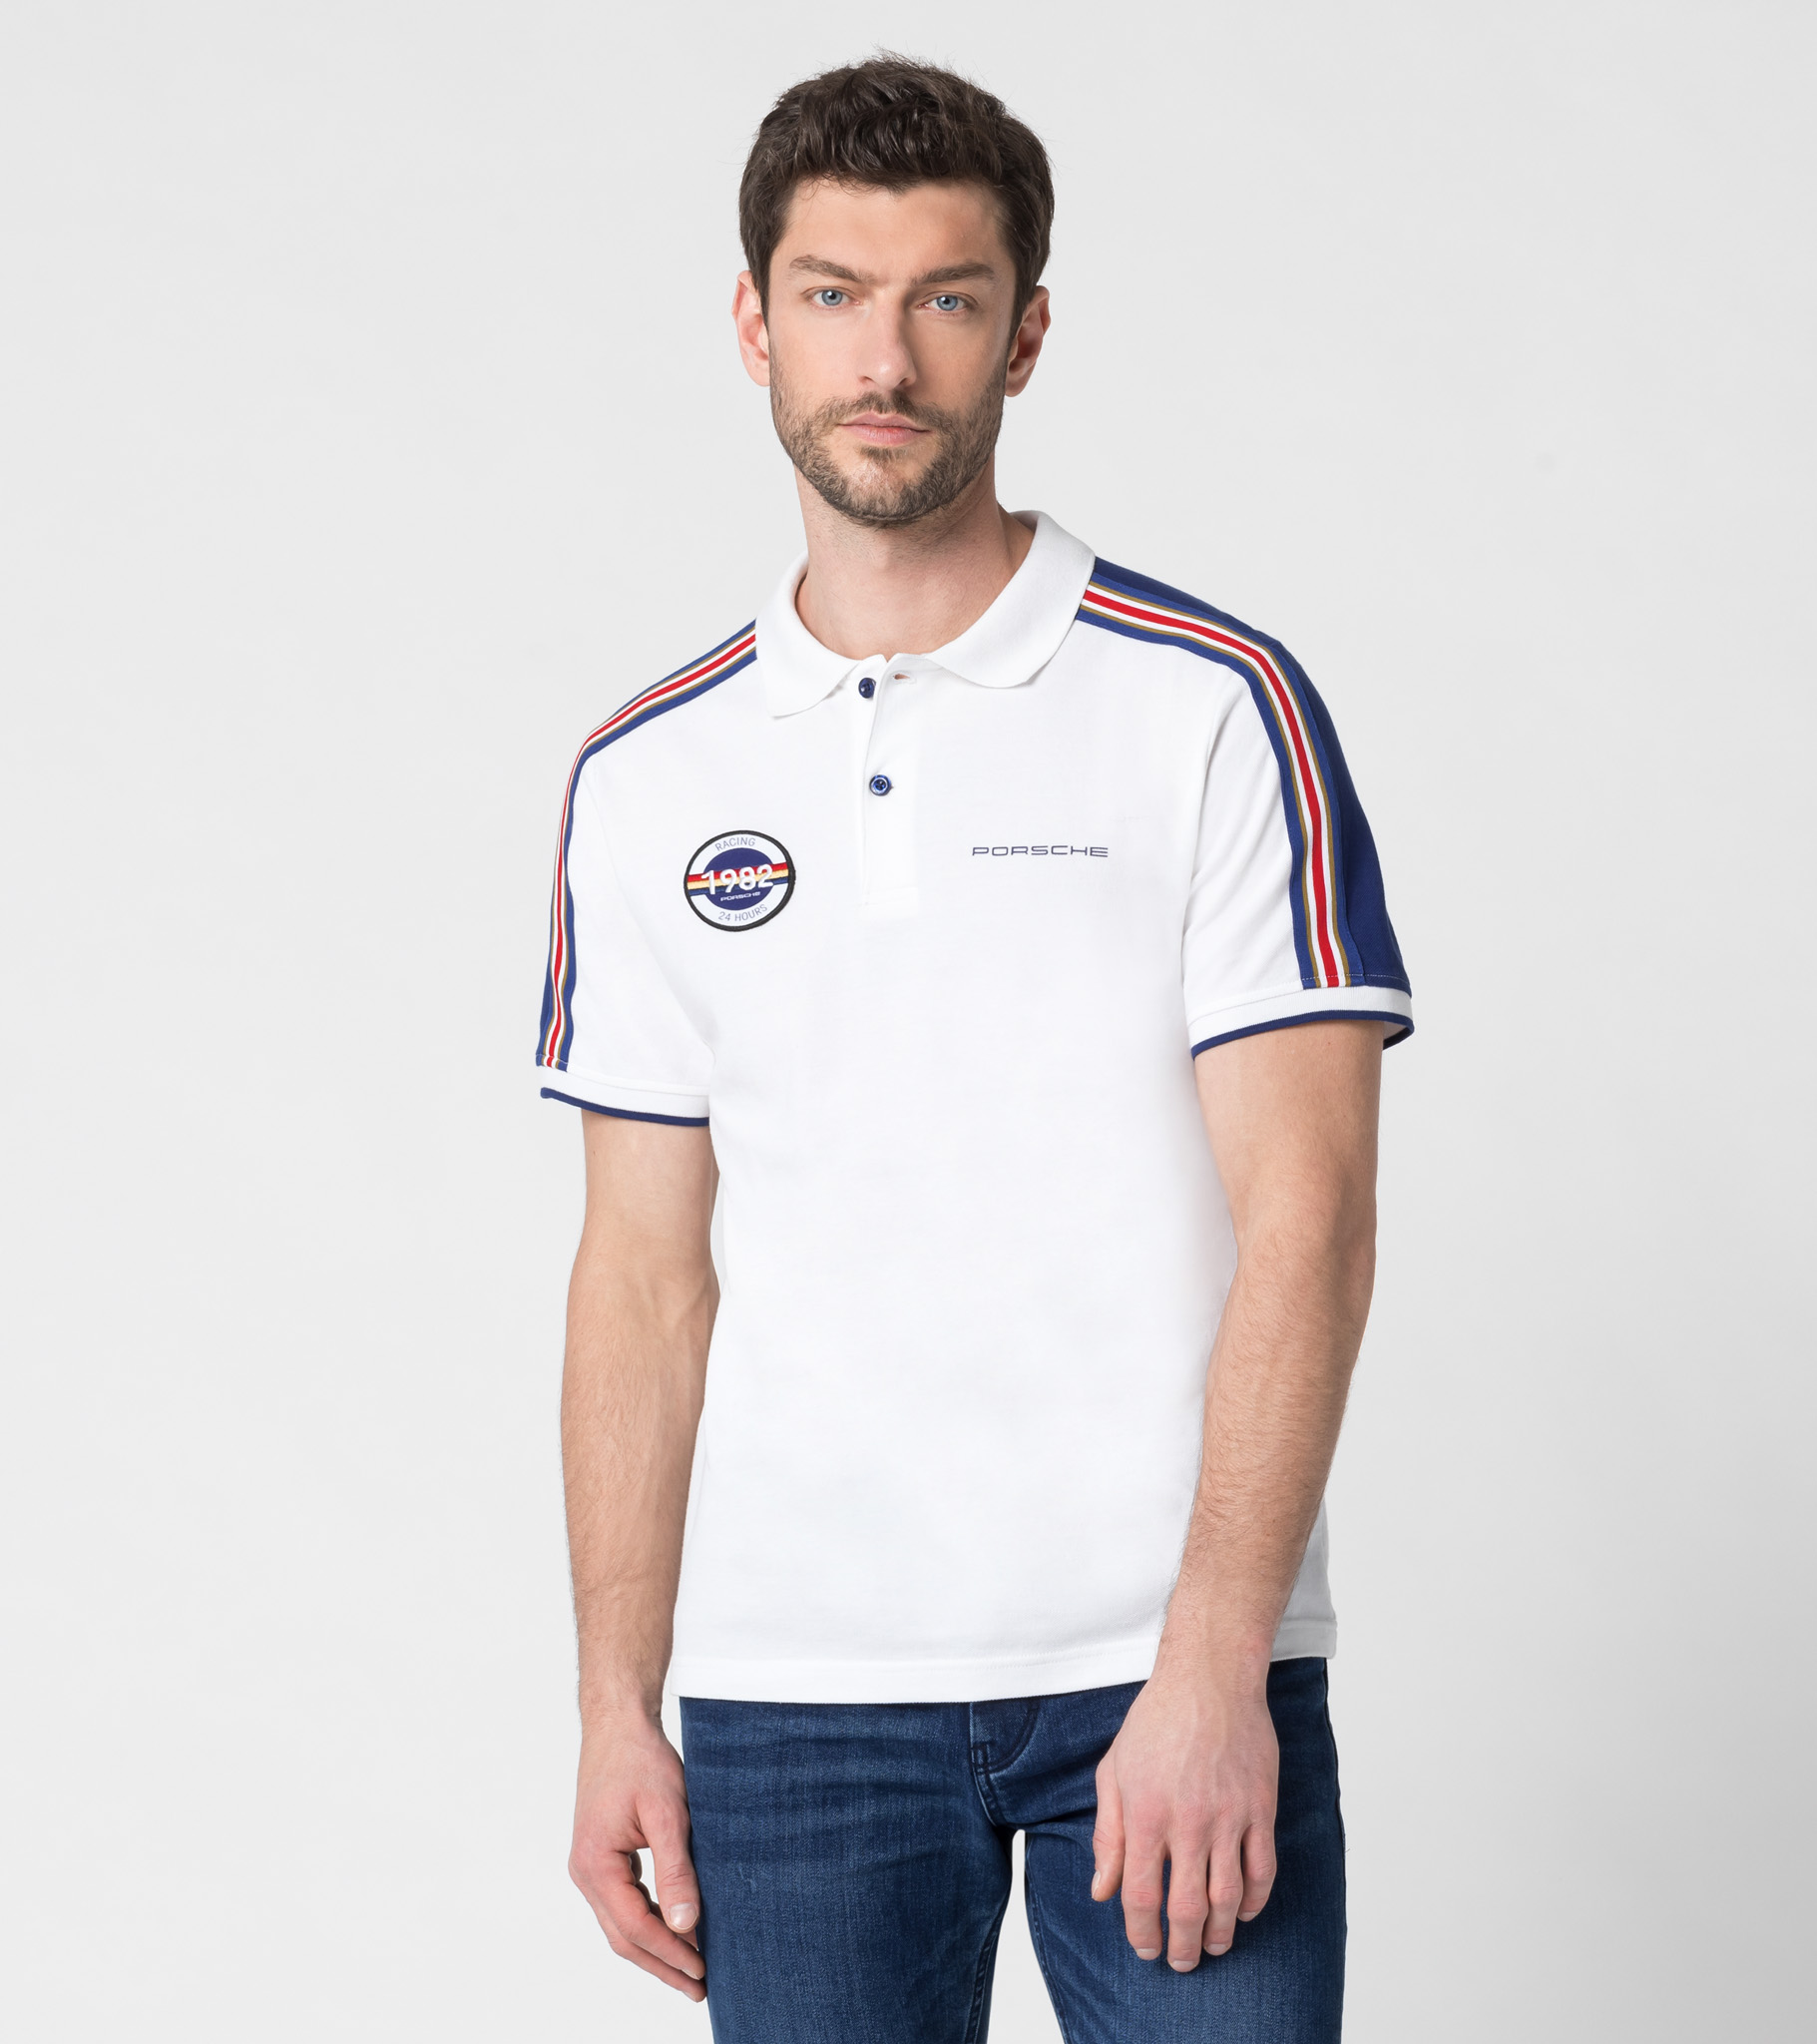 Men's Polo-Shirt - Racing Collection zoom